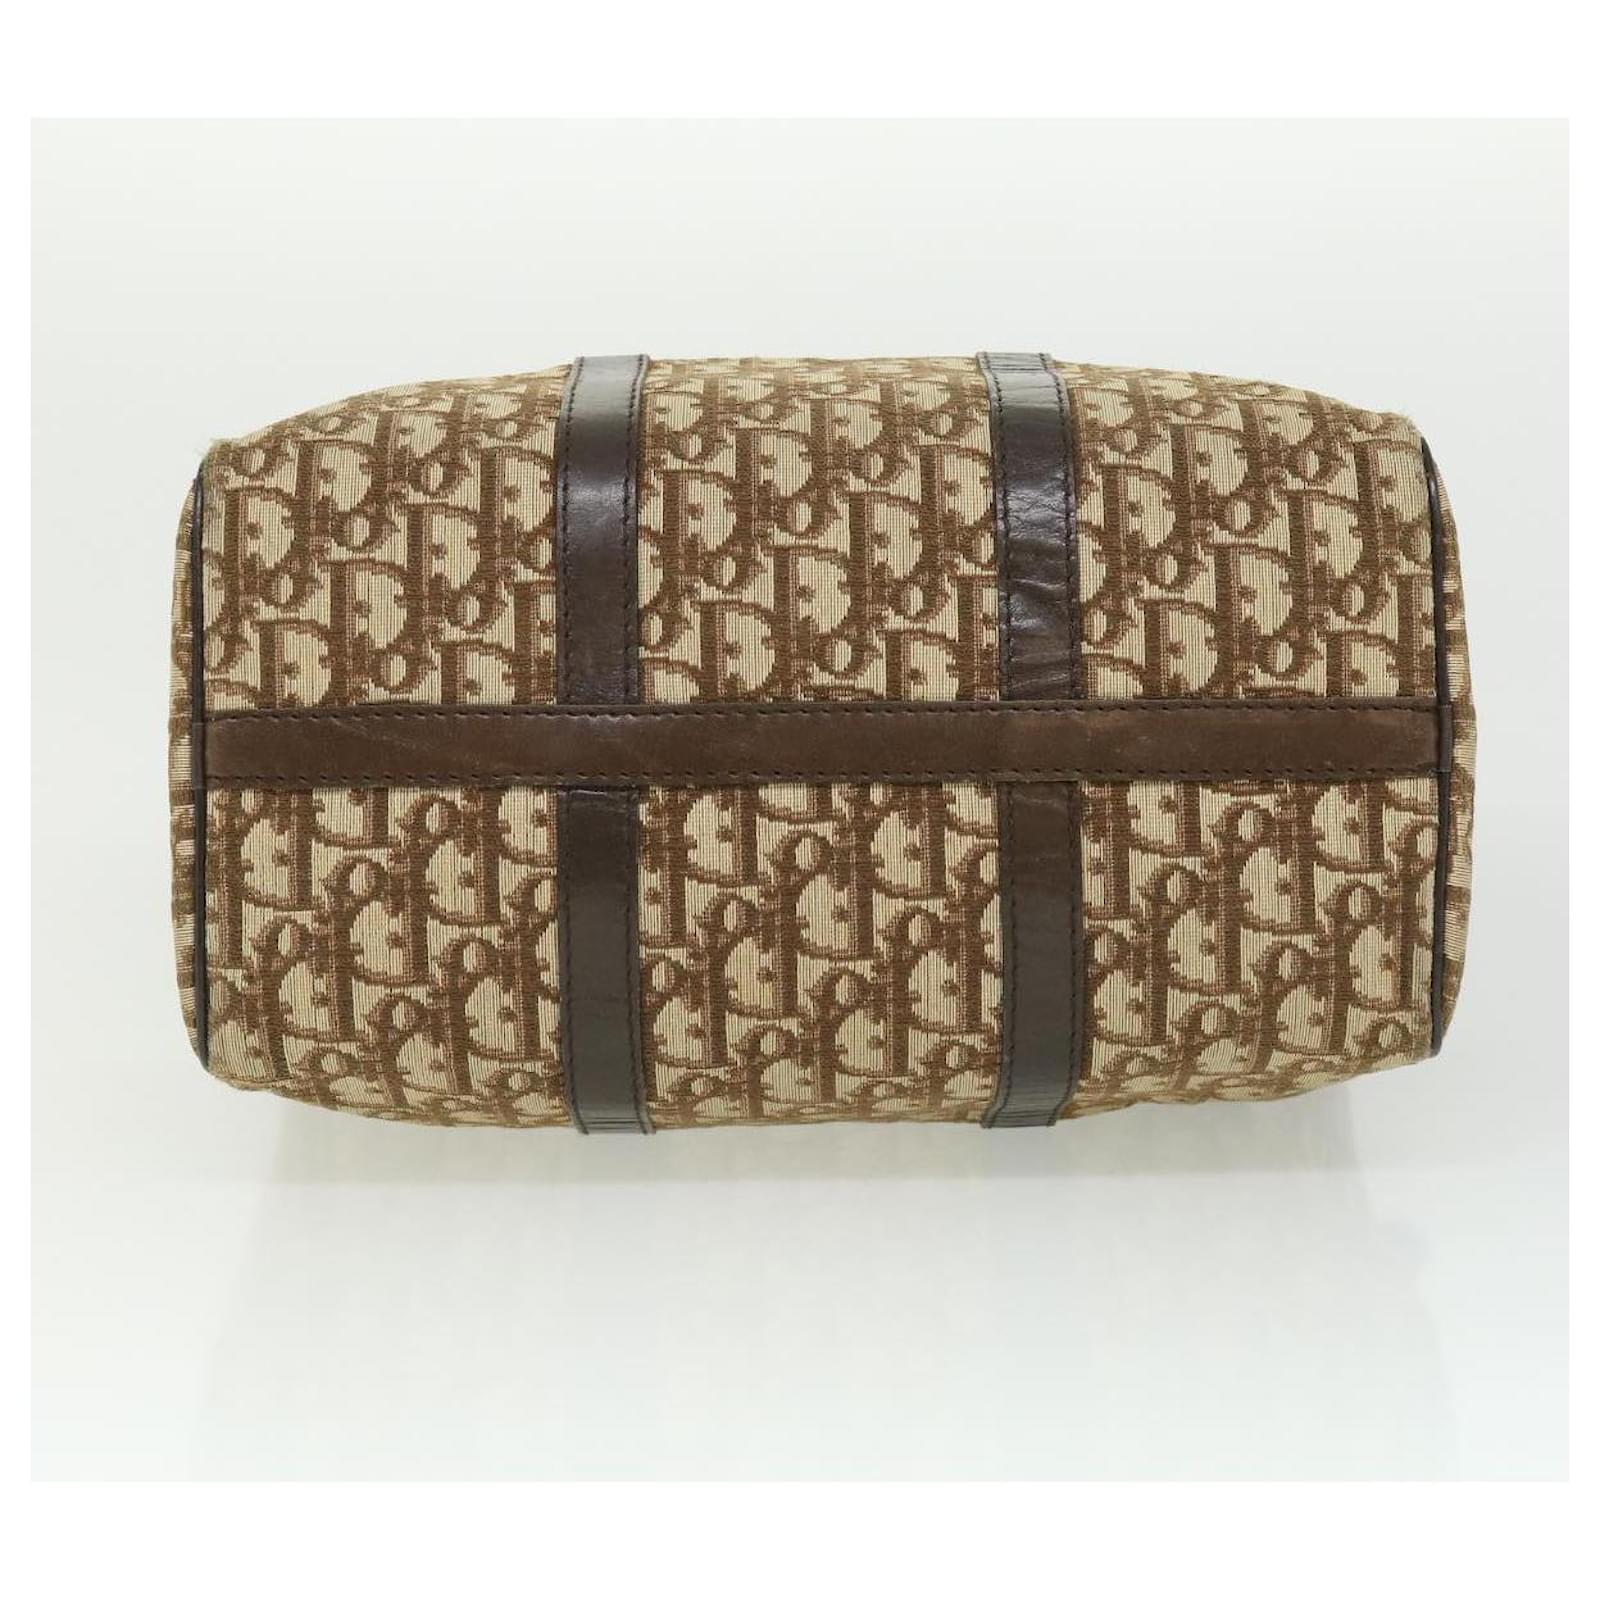 Vintage Dior Oblique Boston bag, Size 25 cm, Color: Brown